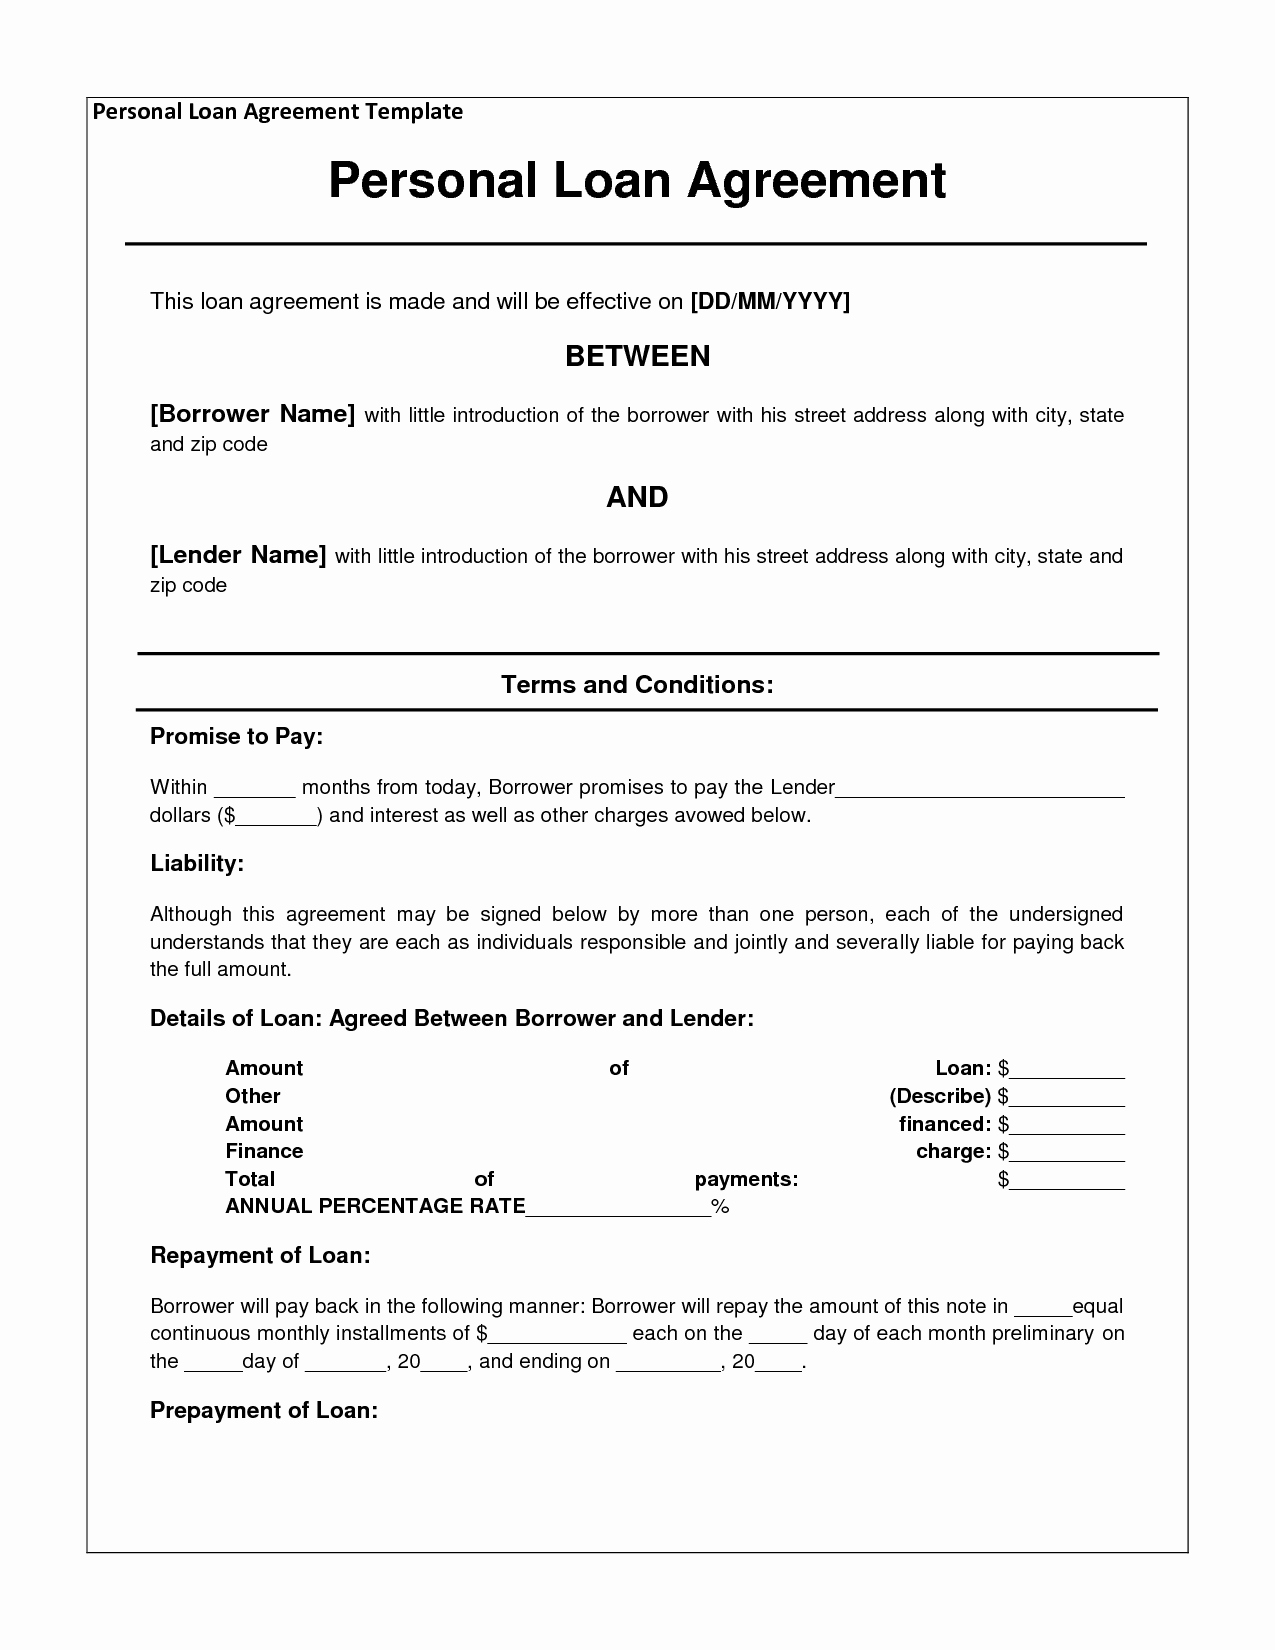 Personal Loan Agreement Templates Beautiful 14 Loan Agreement Templates Excel Pdf formats